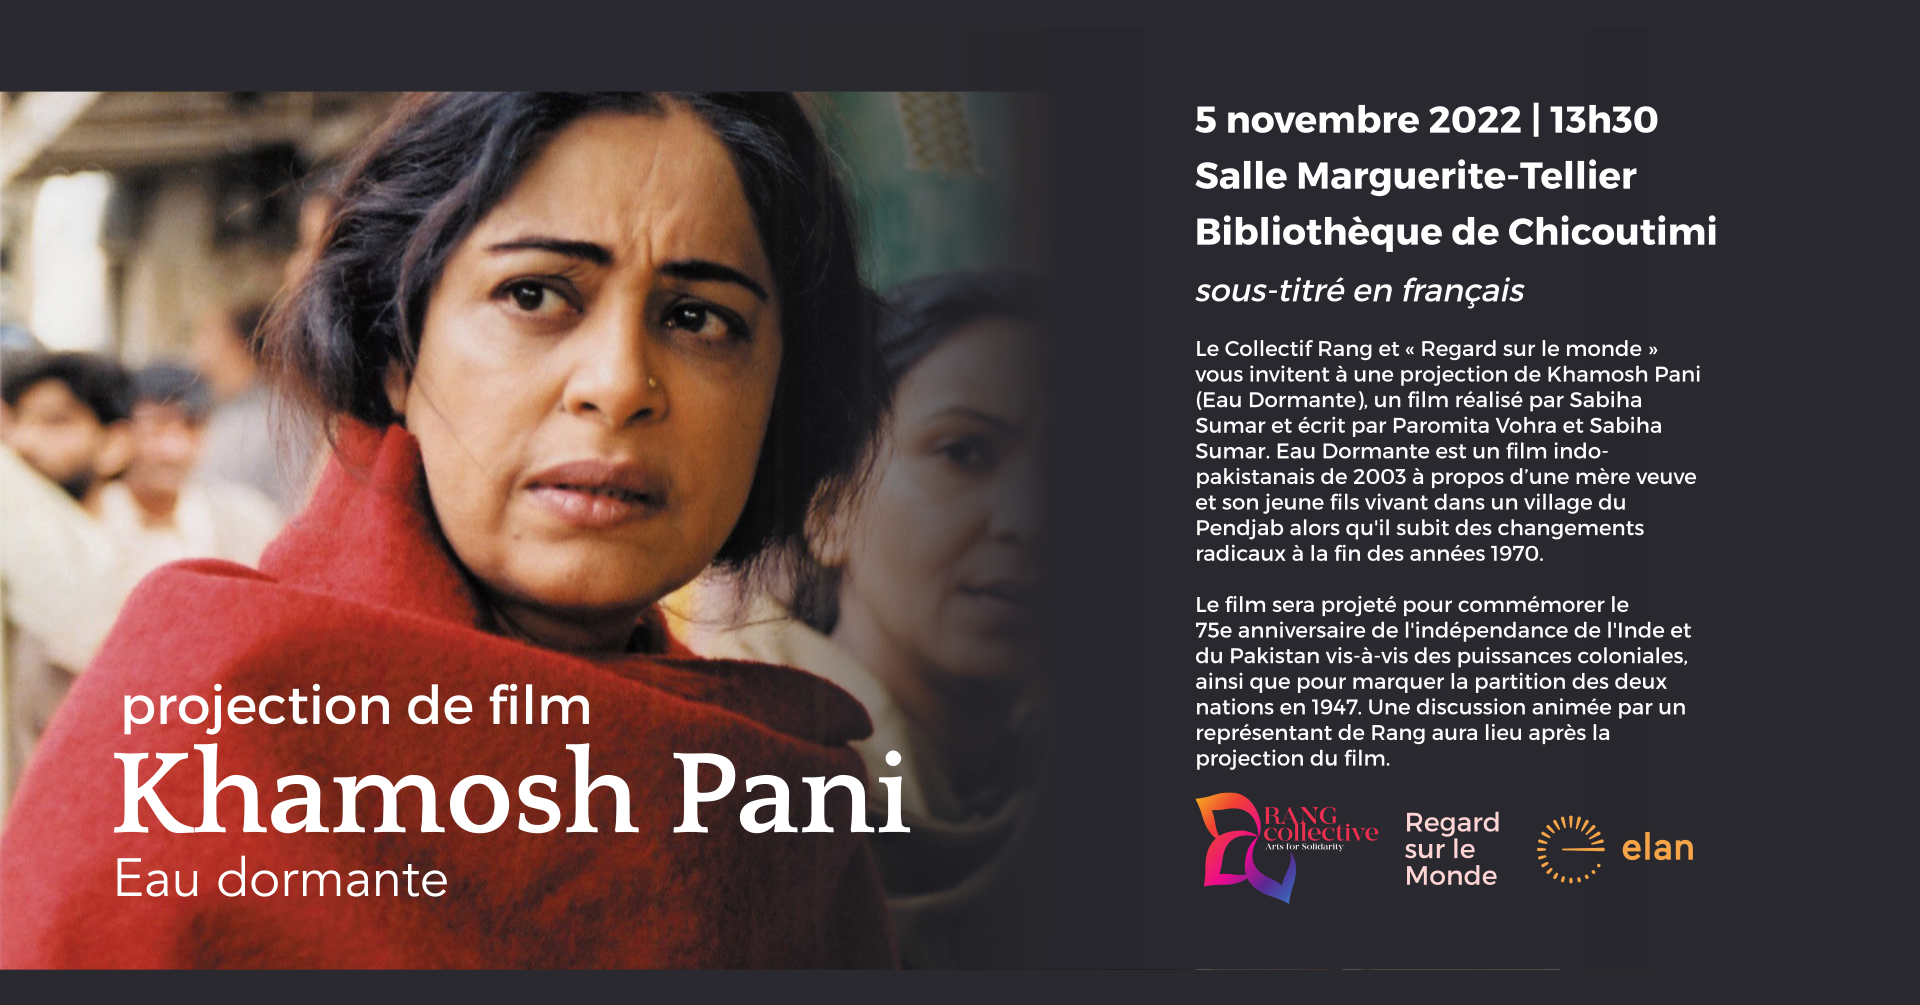 Poster for Khamosh Pani film screening in Saguenay